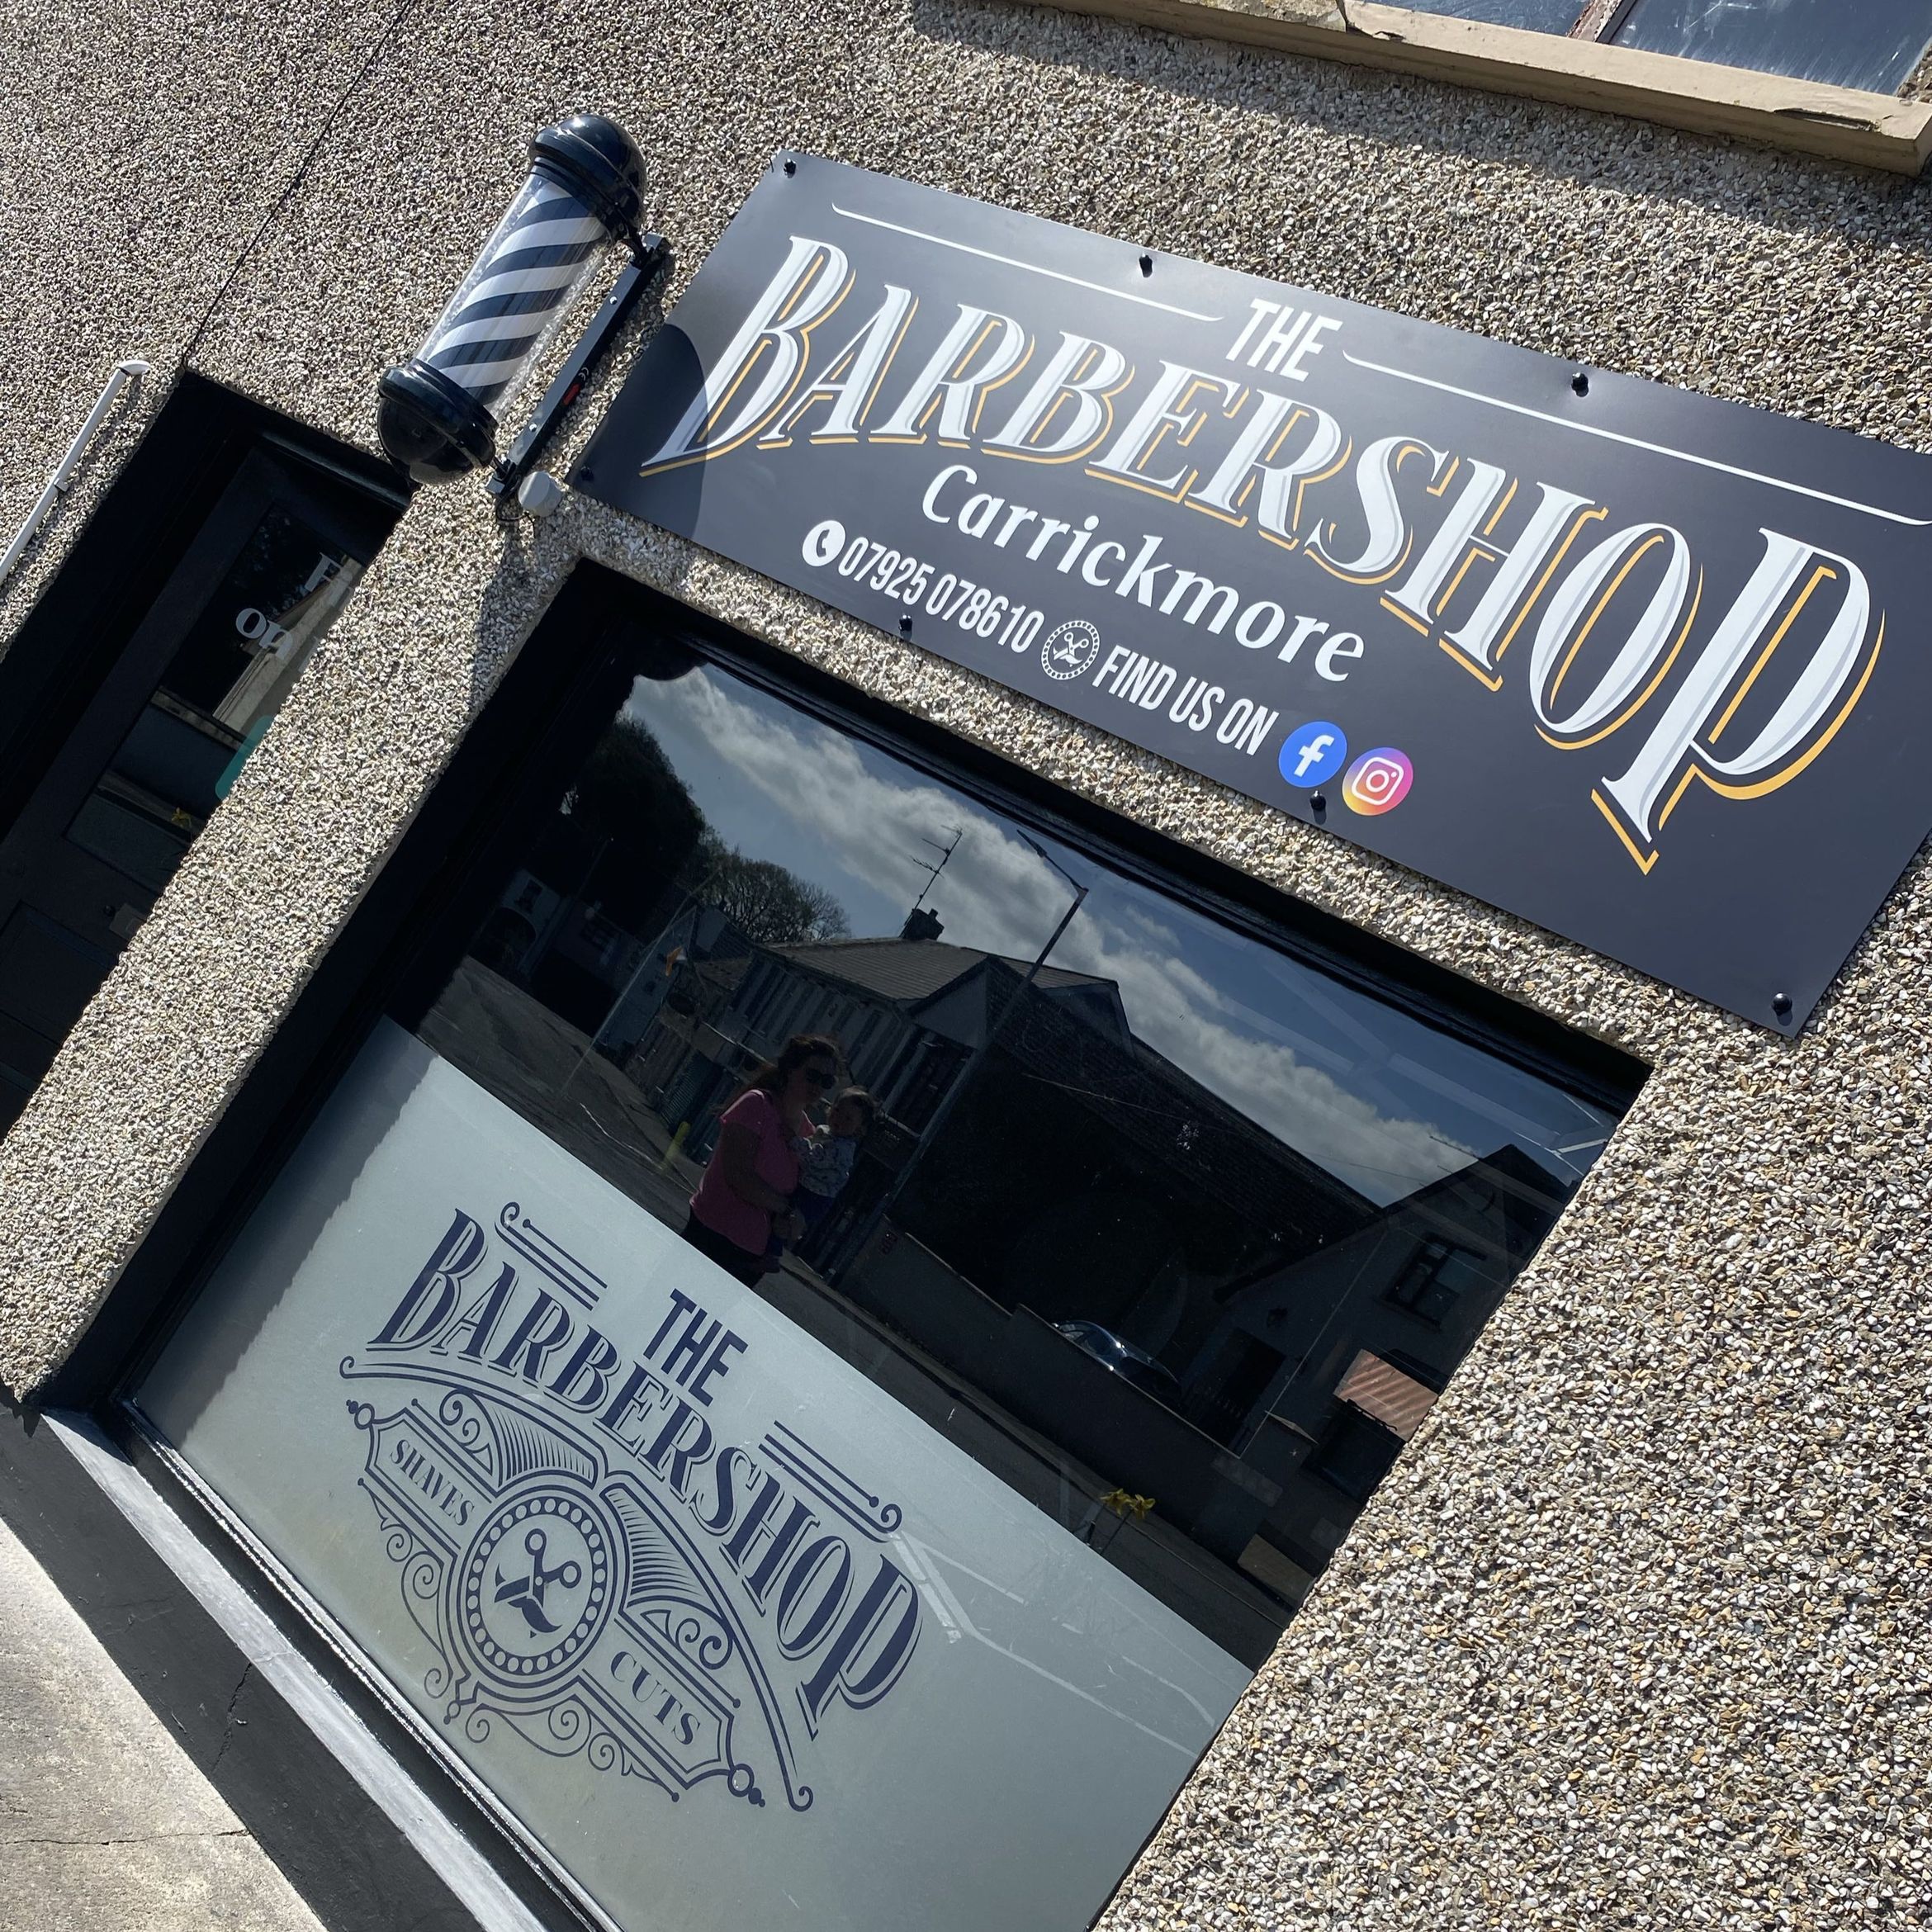 The BarberShop Carrickmore, 8 Creggan Road, Carrickmore, BT79 9BD, Omagh